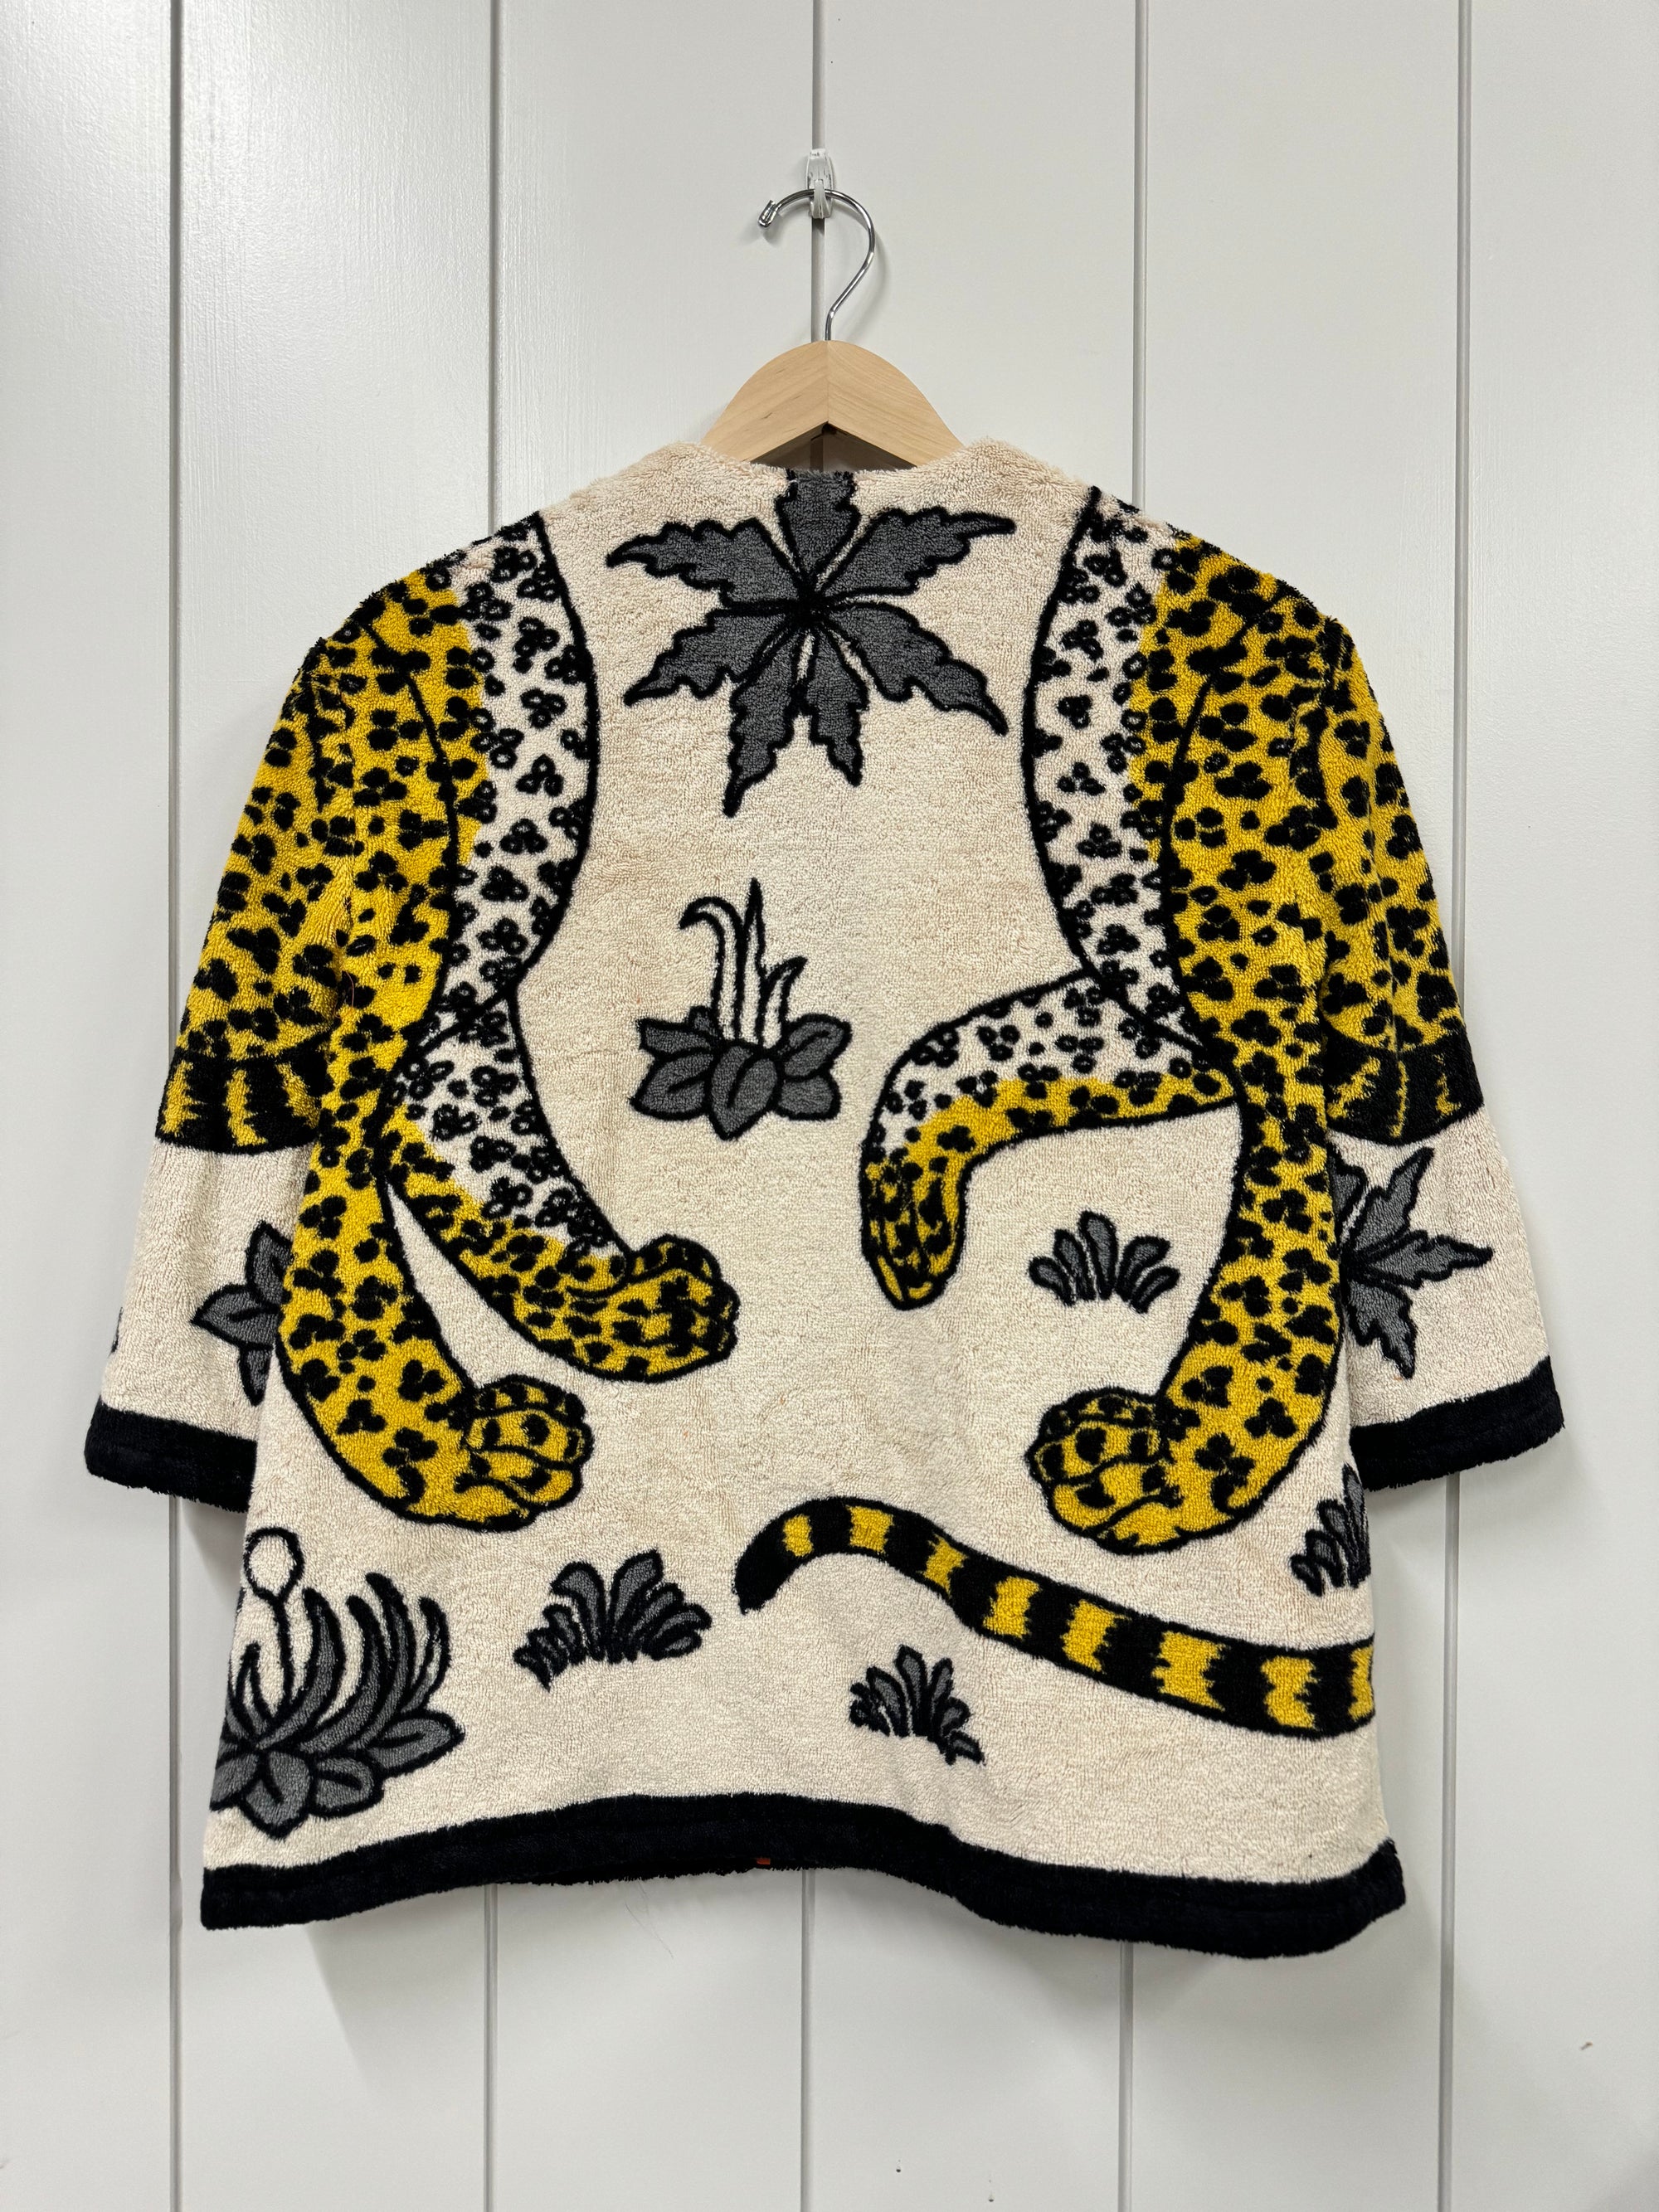 The Leopard Print Jacket